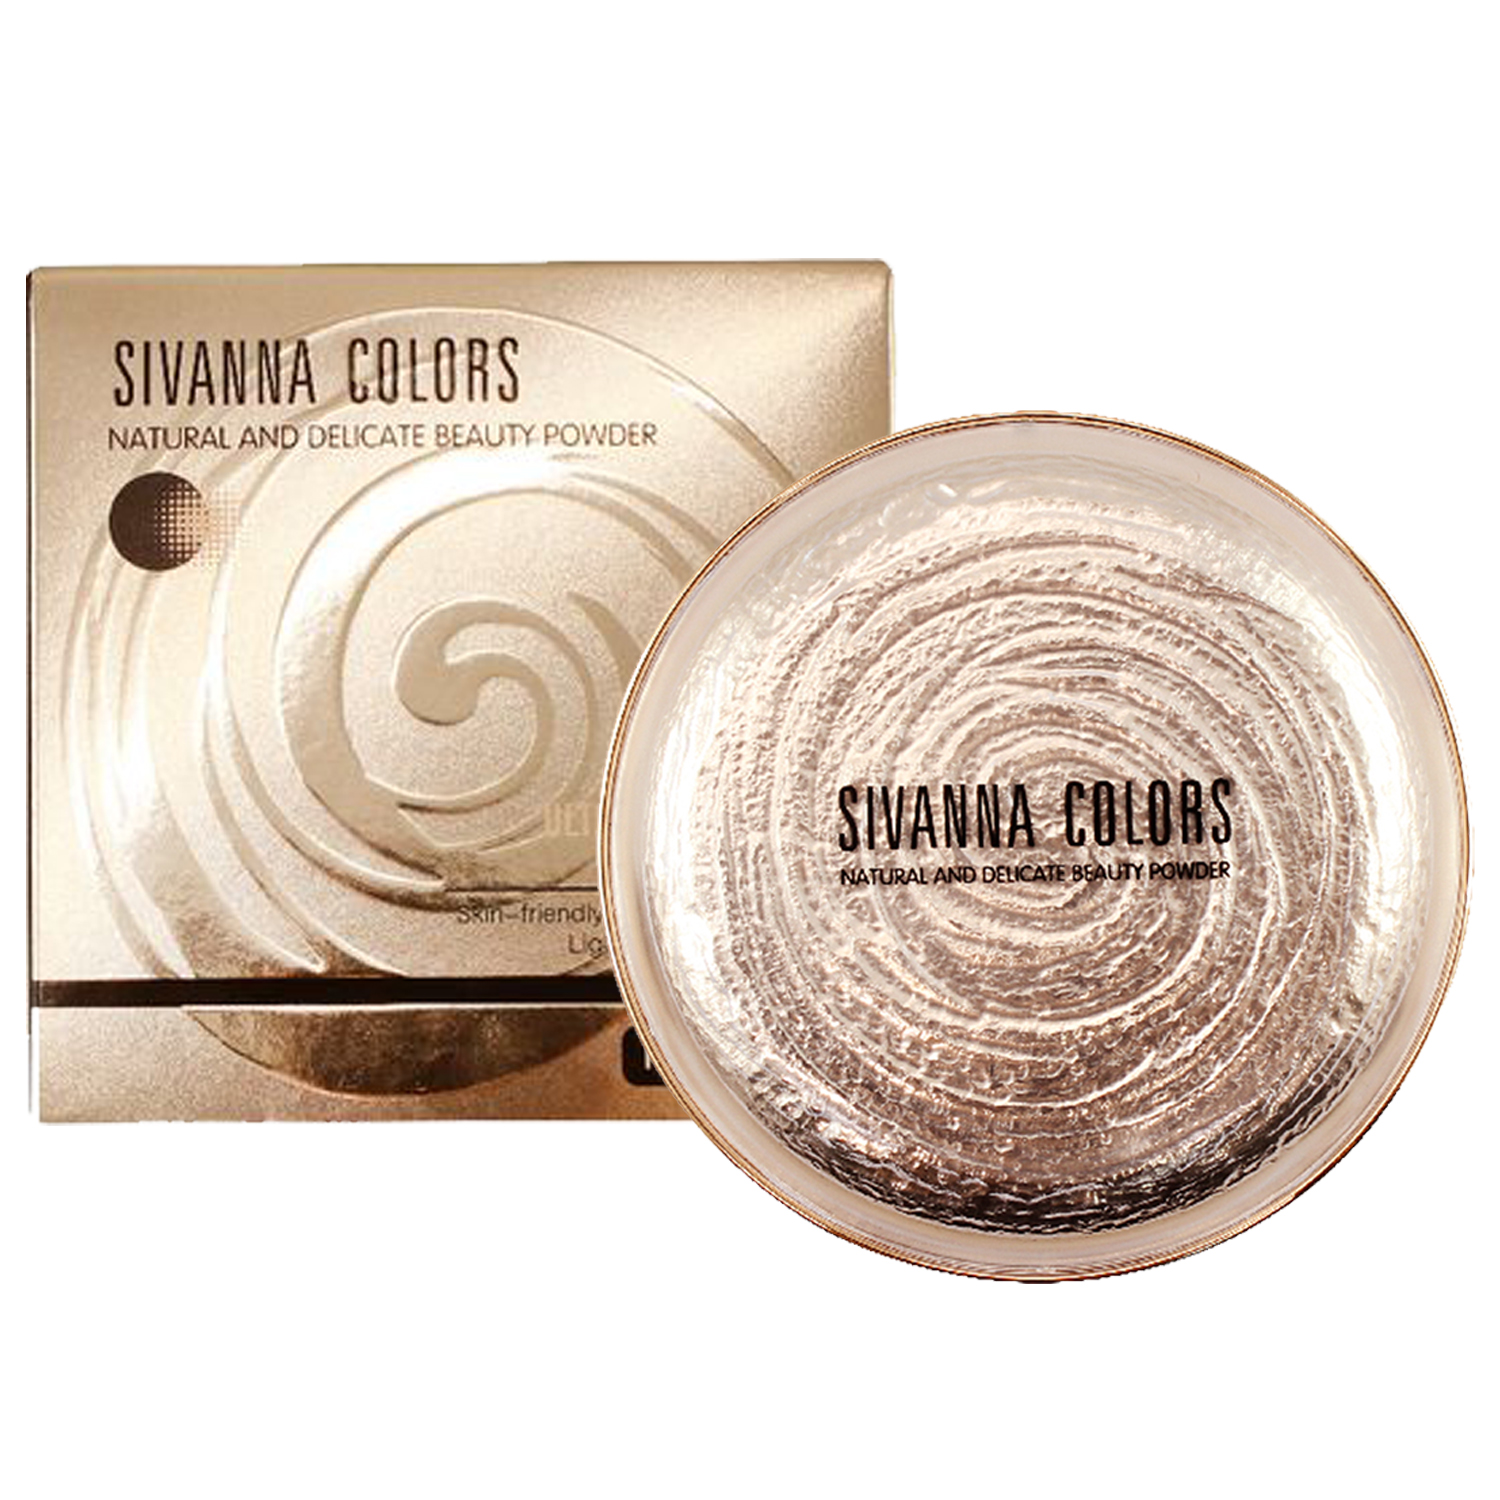 Sivanna Colors Natural And Delicate Beauty Powder HF689 ซีเวียน่า แป้งหอยตลับสีทอง